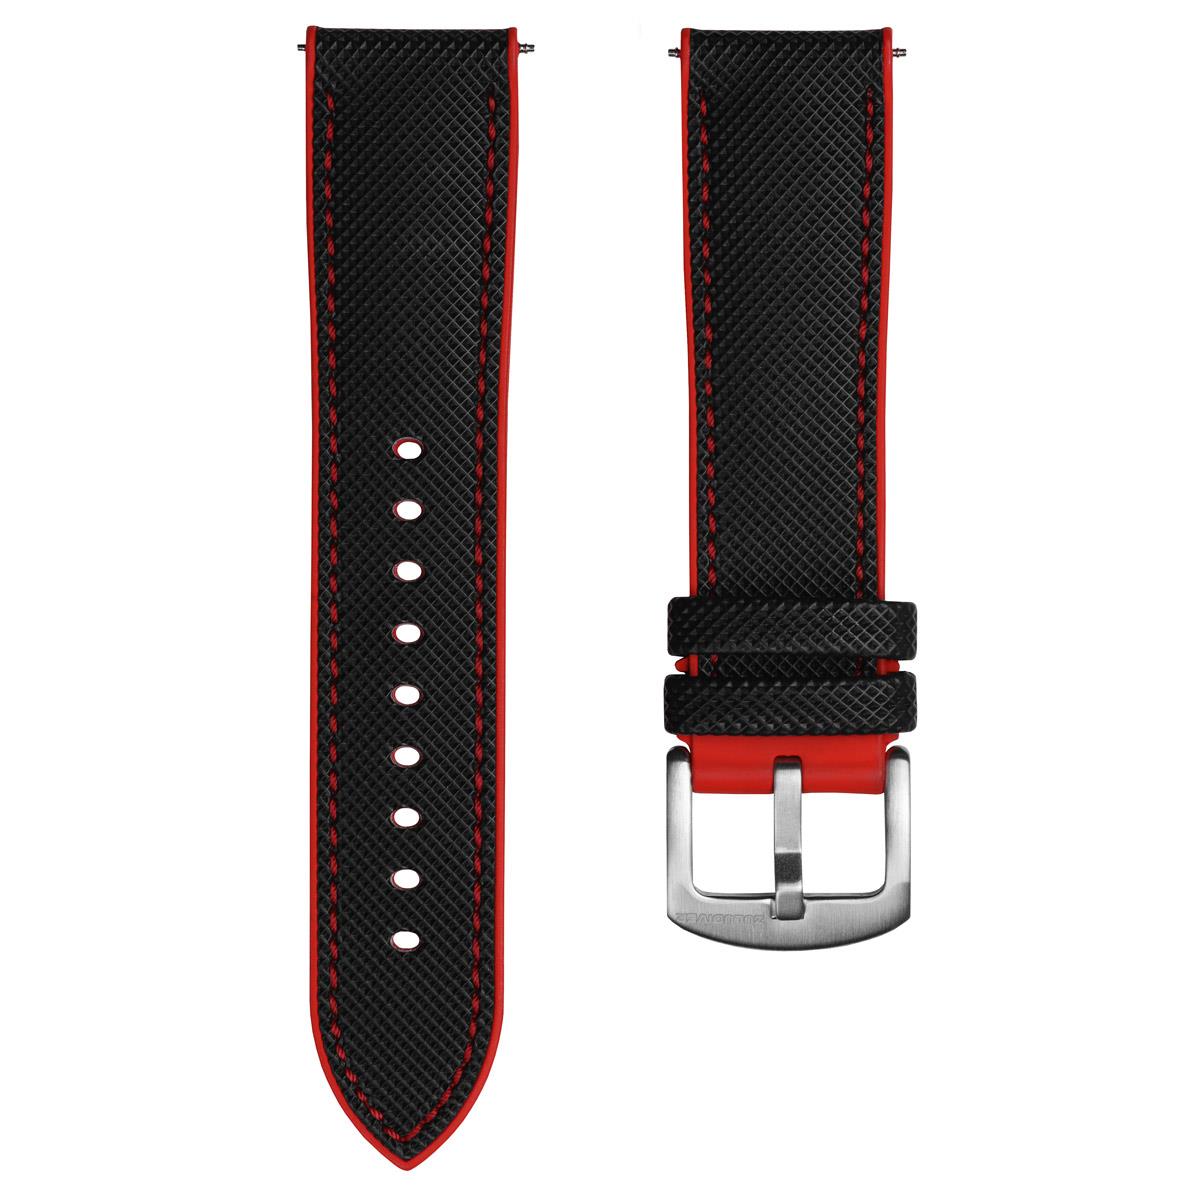 ANVIL FKM Rubber Watch Strap - Black / Red